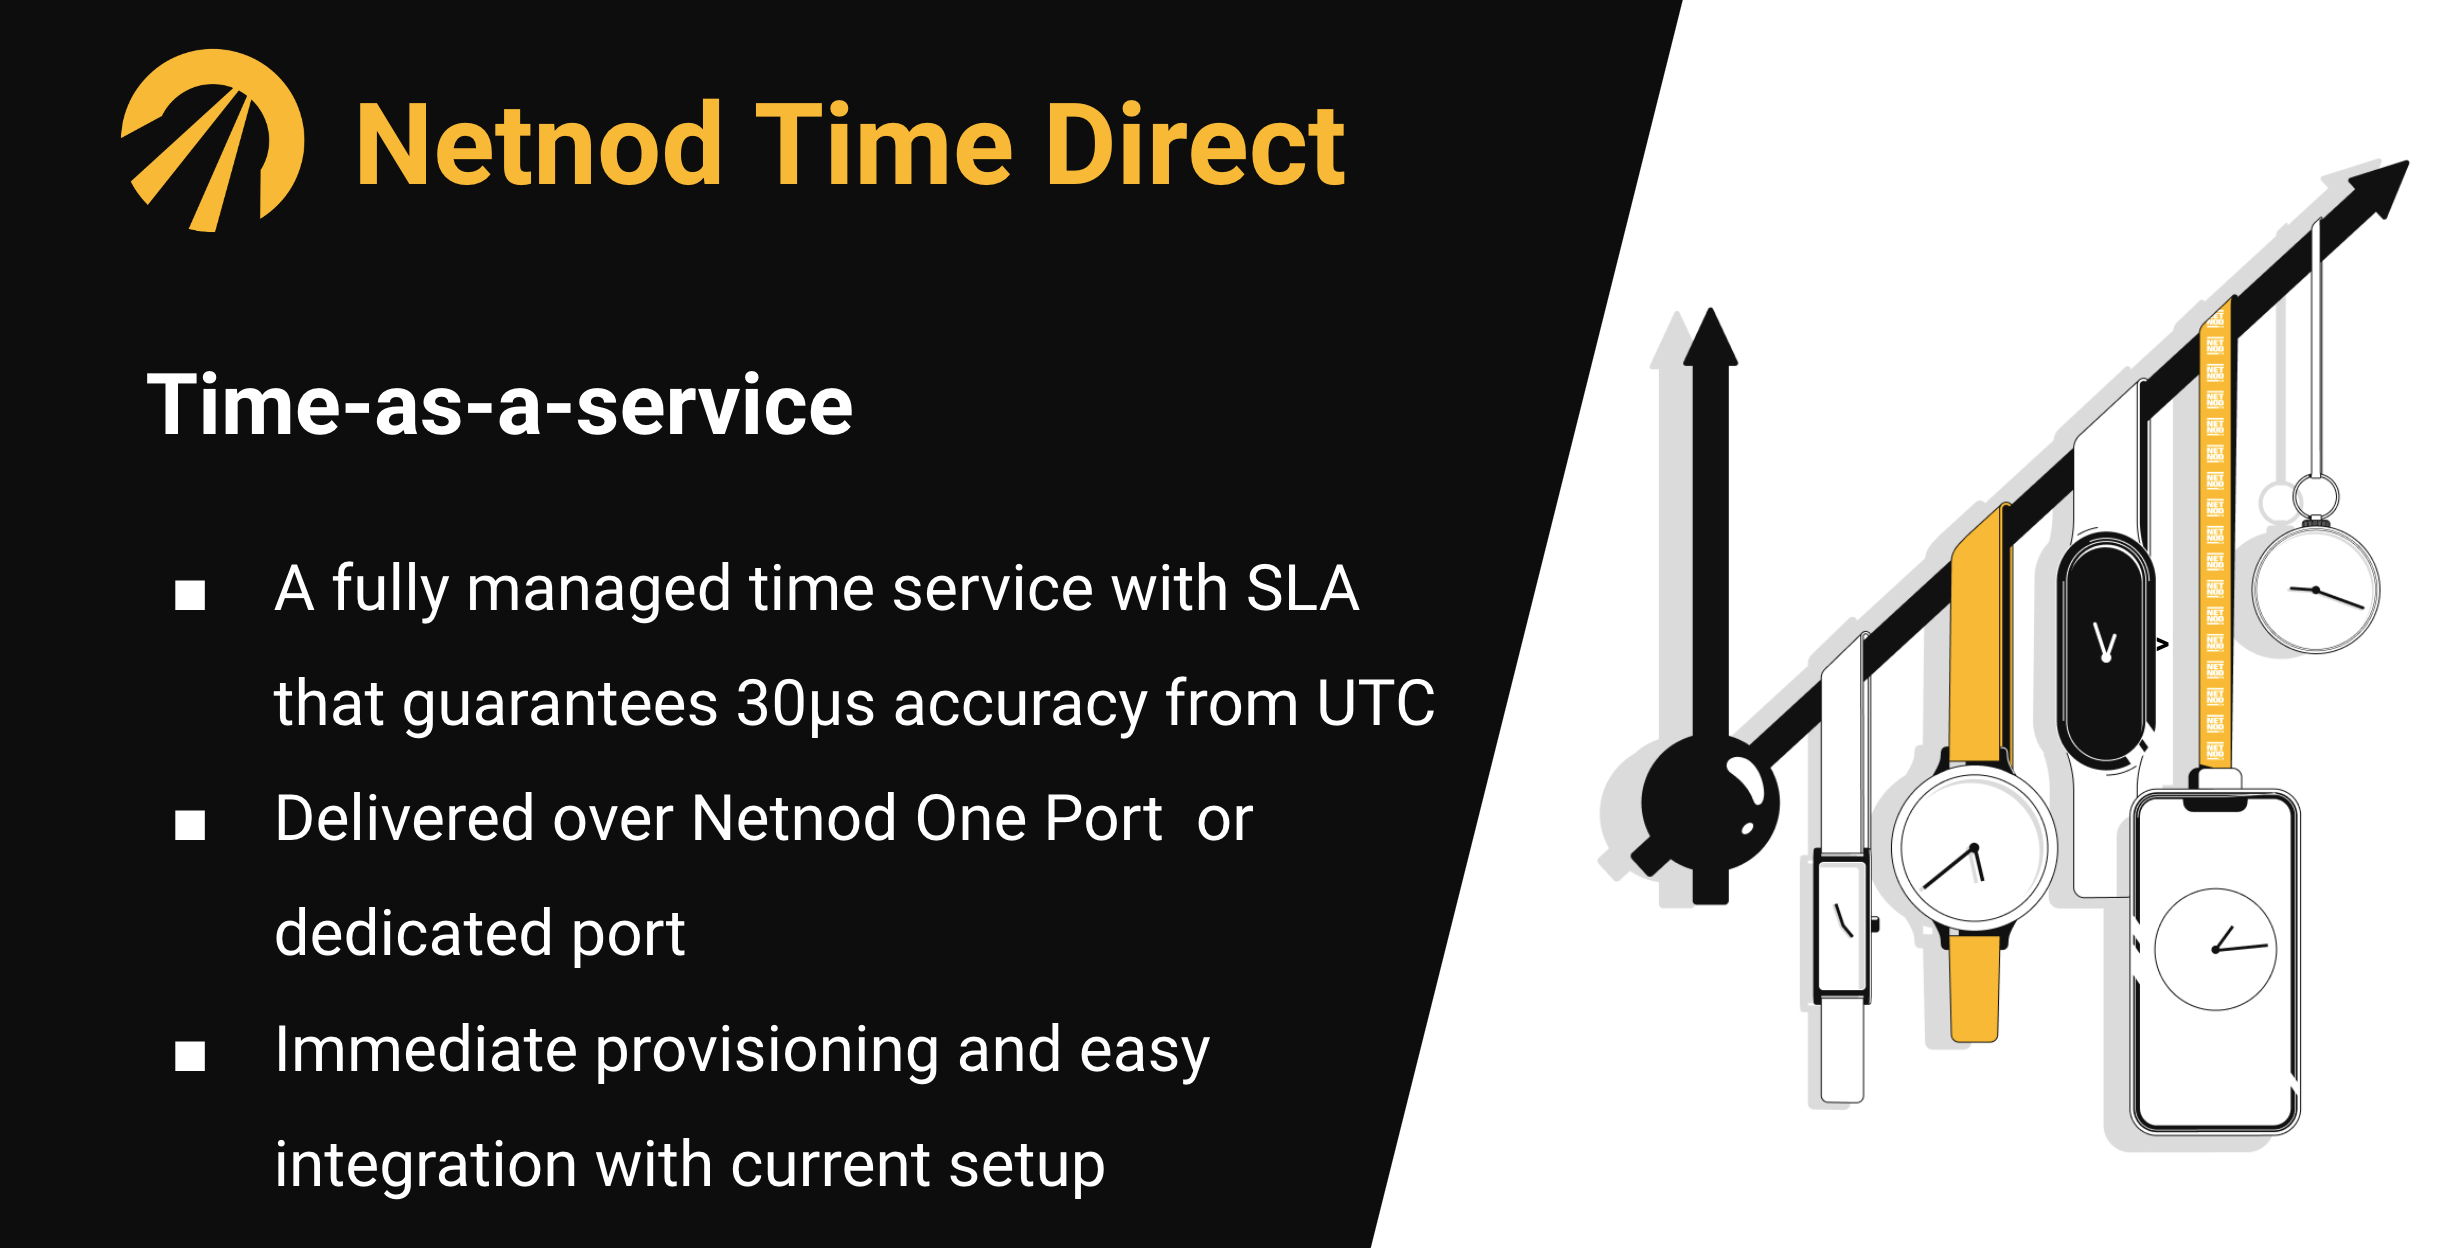 Netnod Time Direct